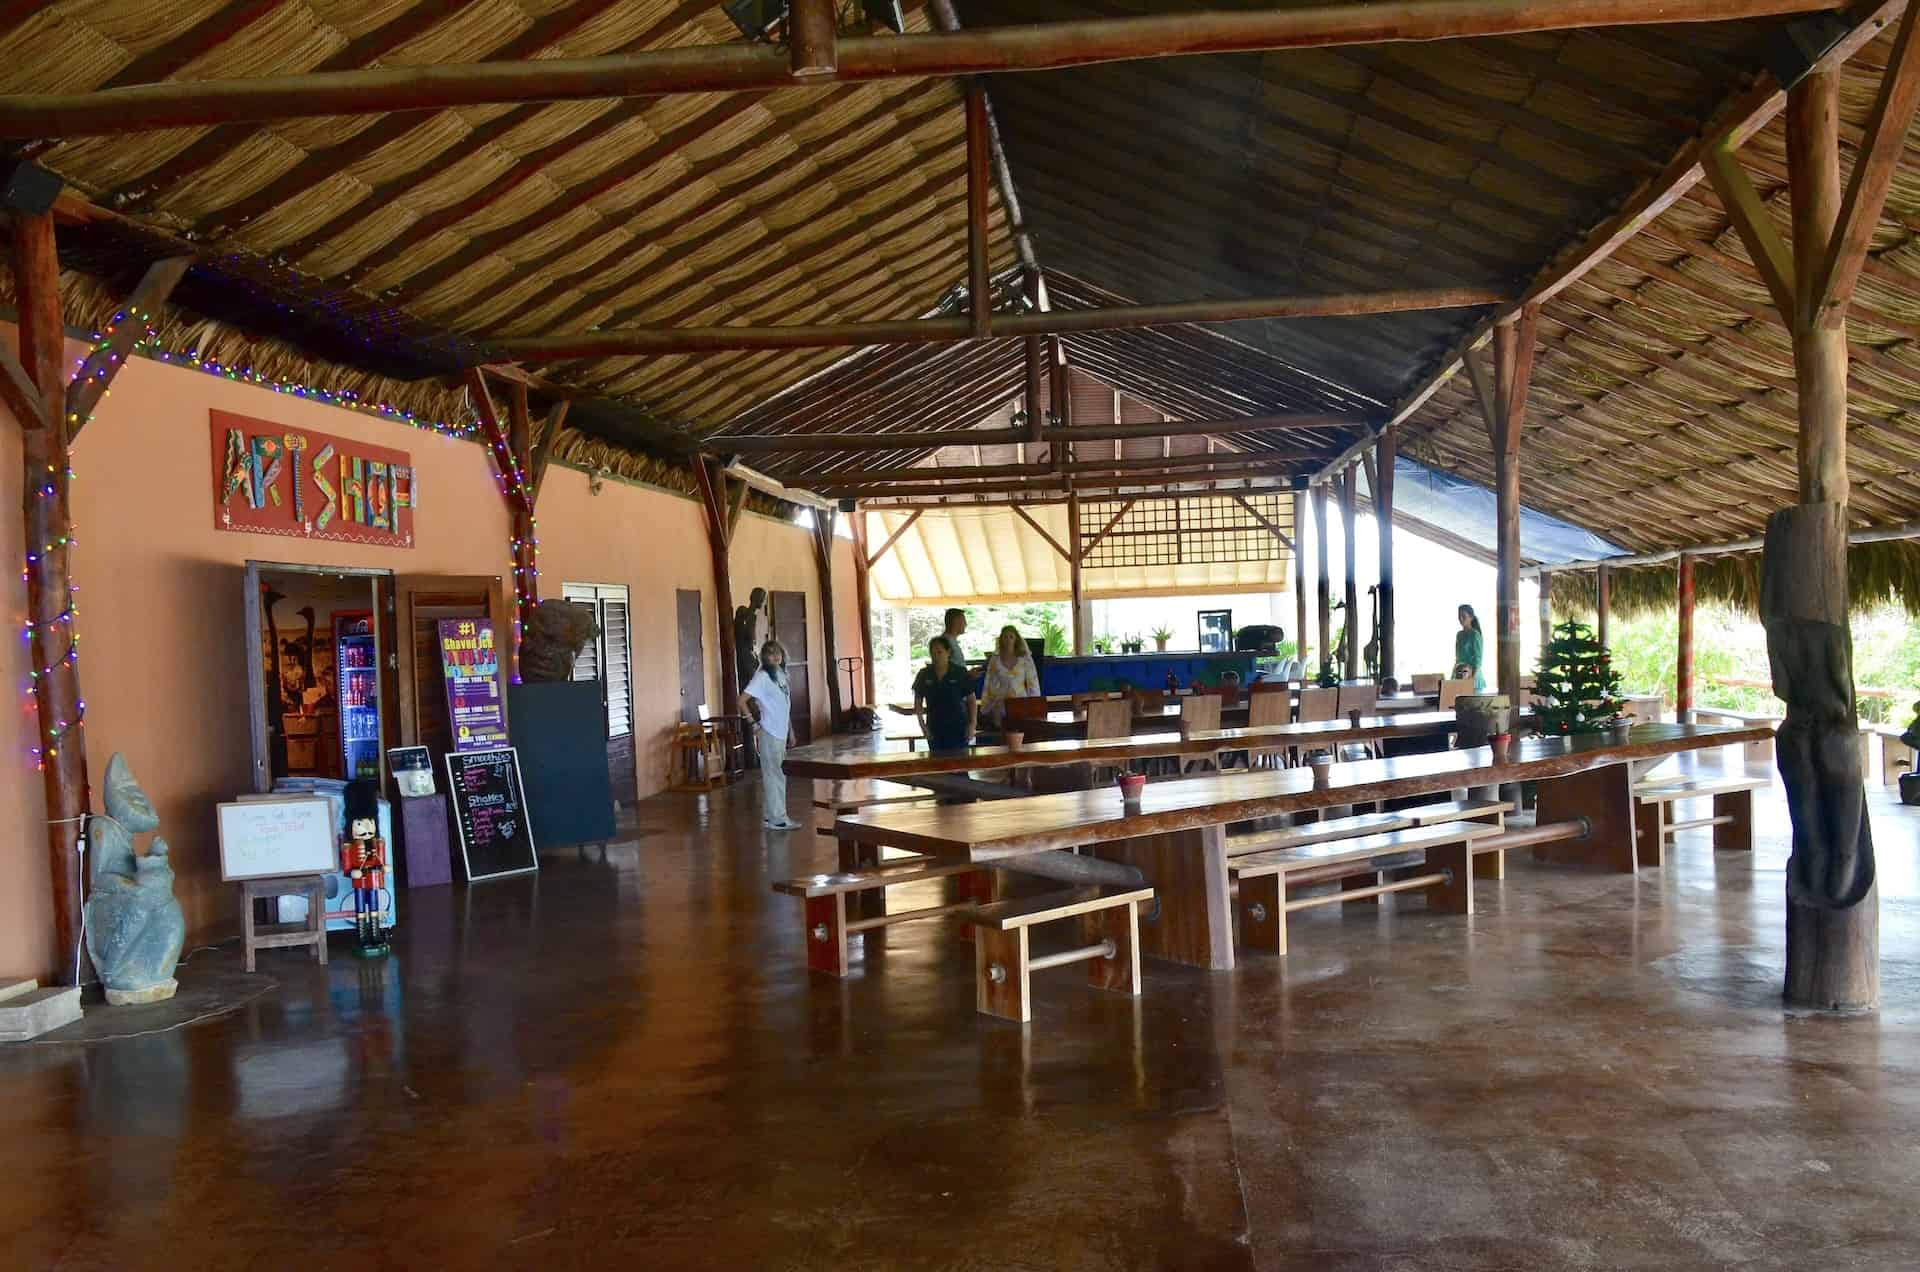 Restaurant and reception area at the Aruba Ostrich Farm